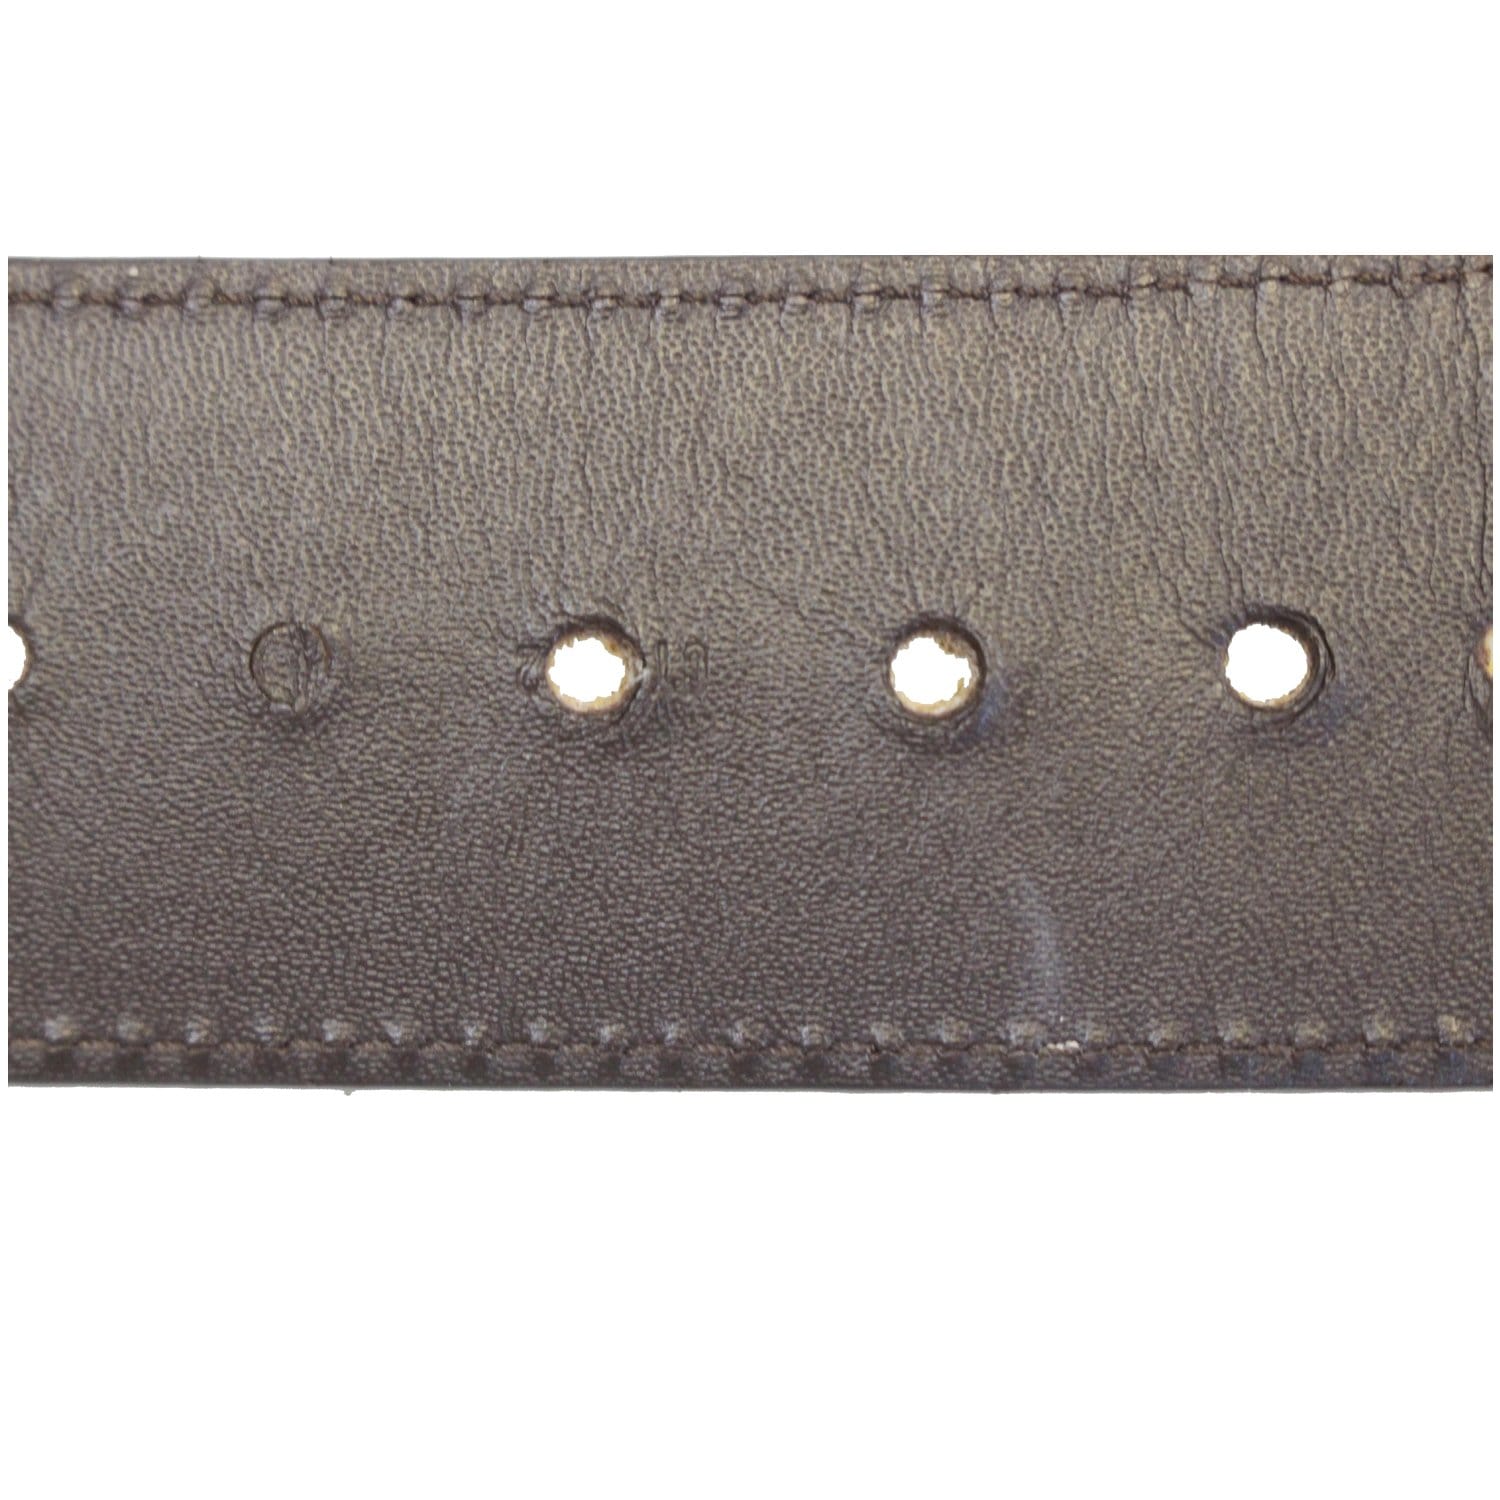 Leather belt Louis Vuitton Beige size M International in Leather - 33821132